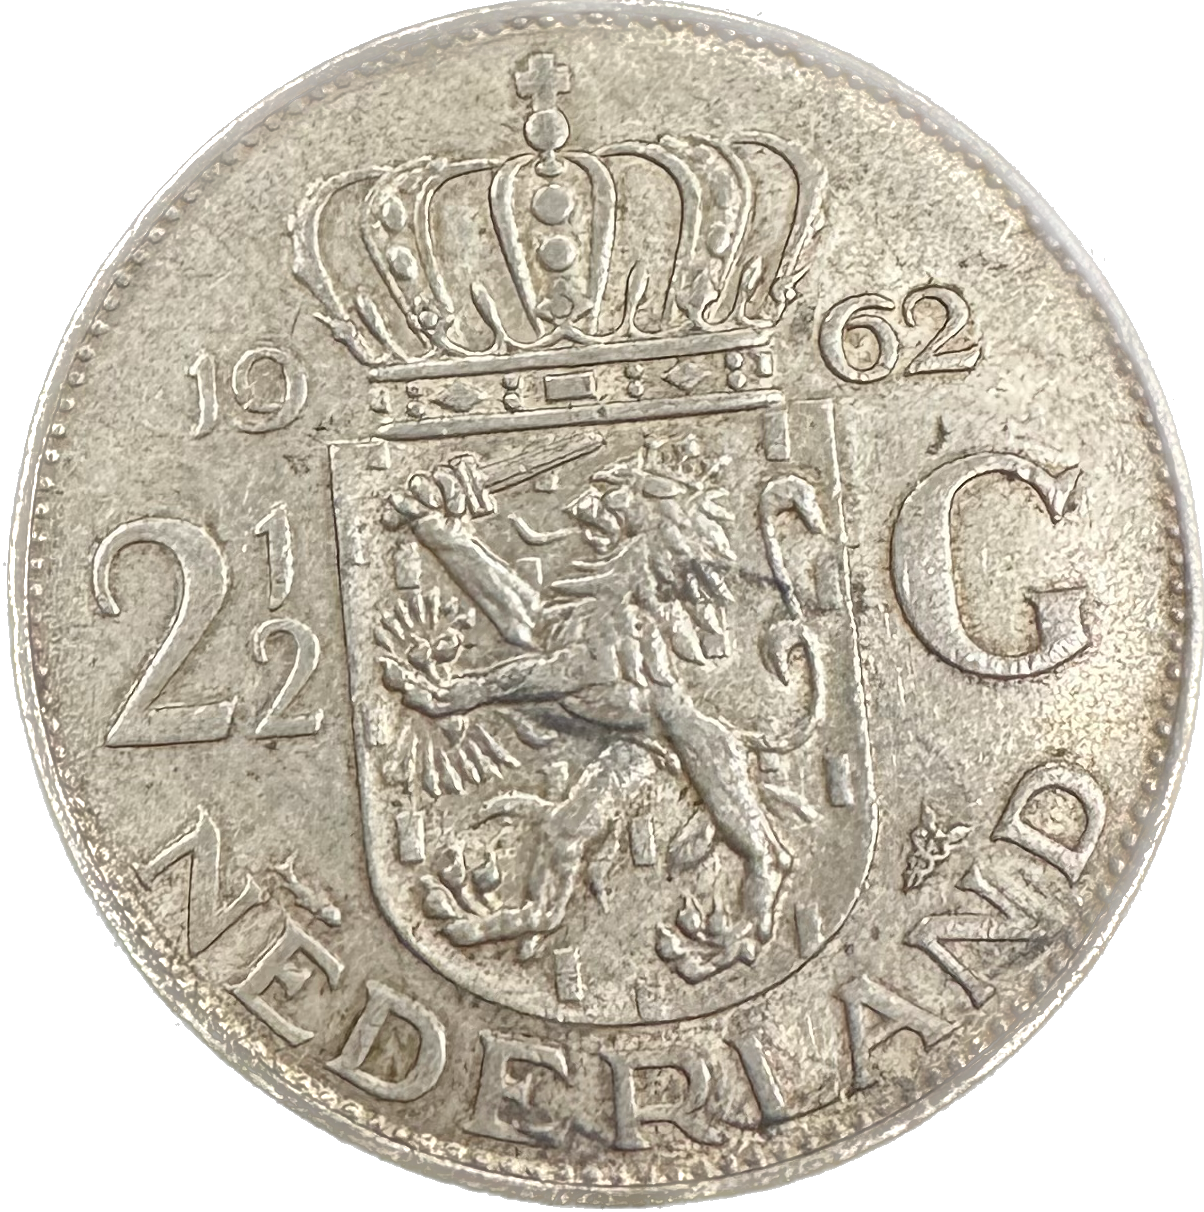 Netherlands 2 1/2 Guilder 1962 Silver Coin